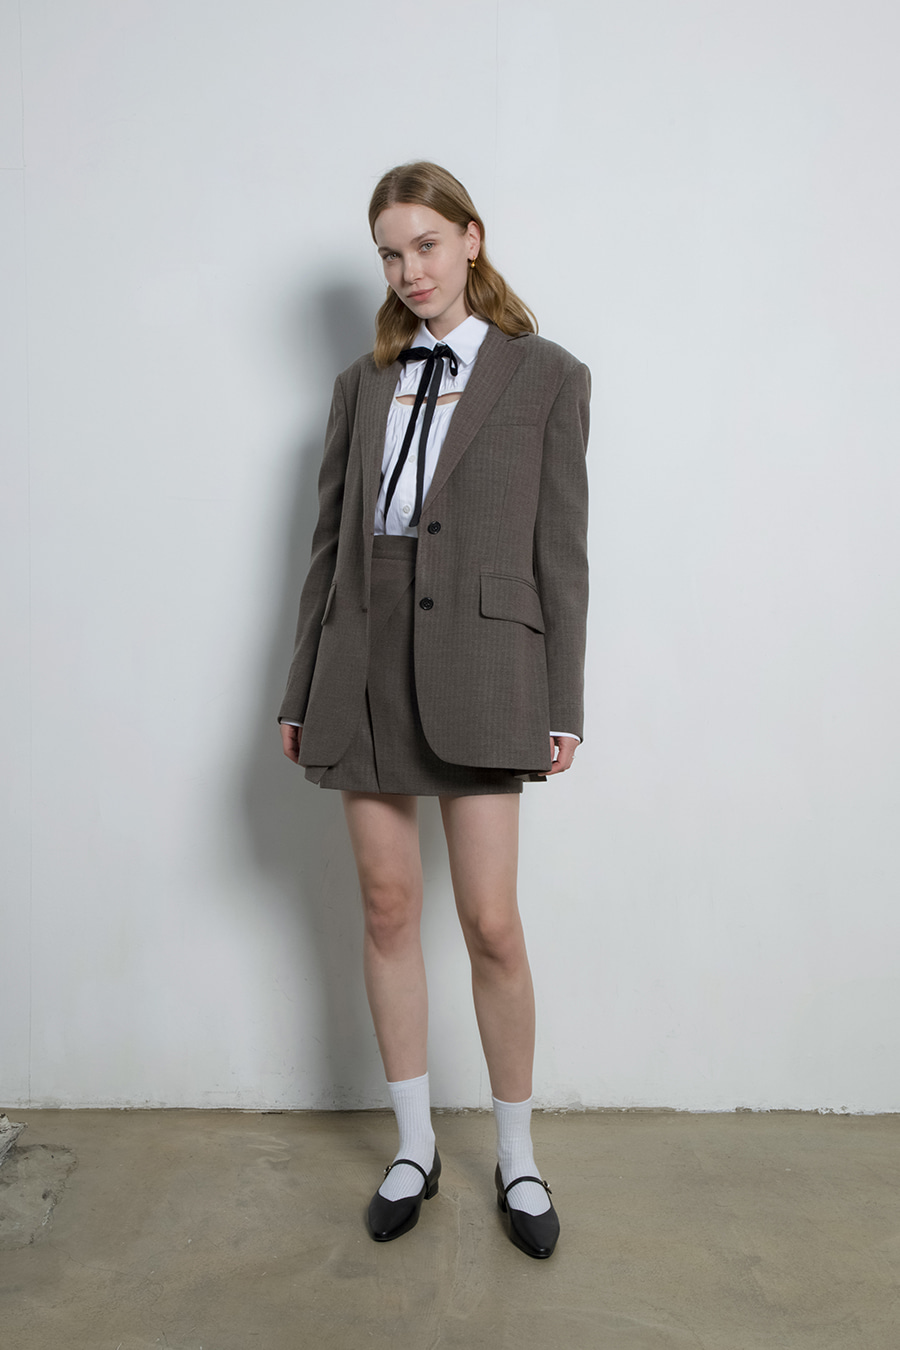 Herringbone suit side slit skirt